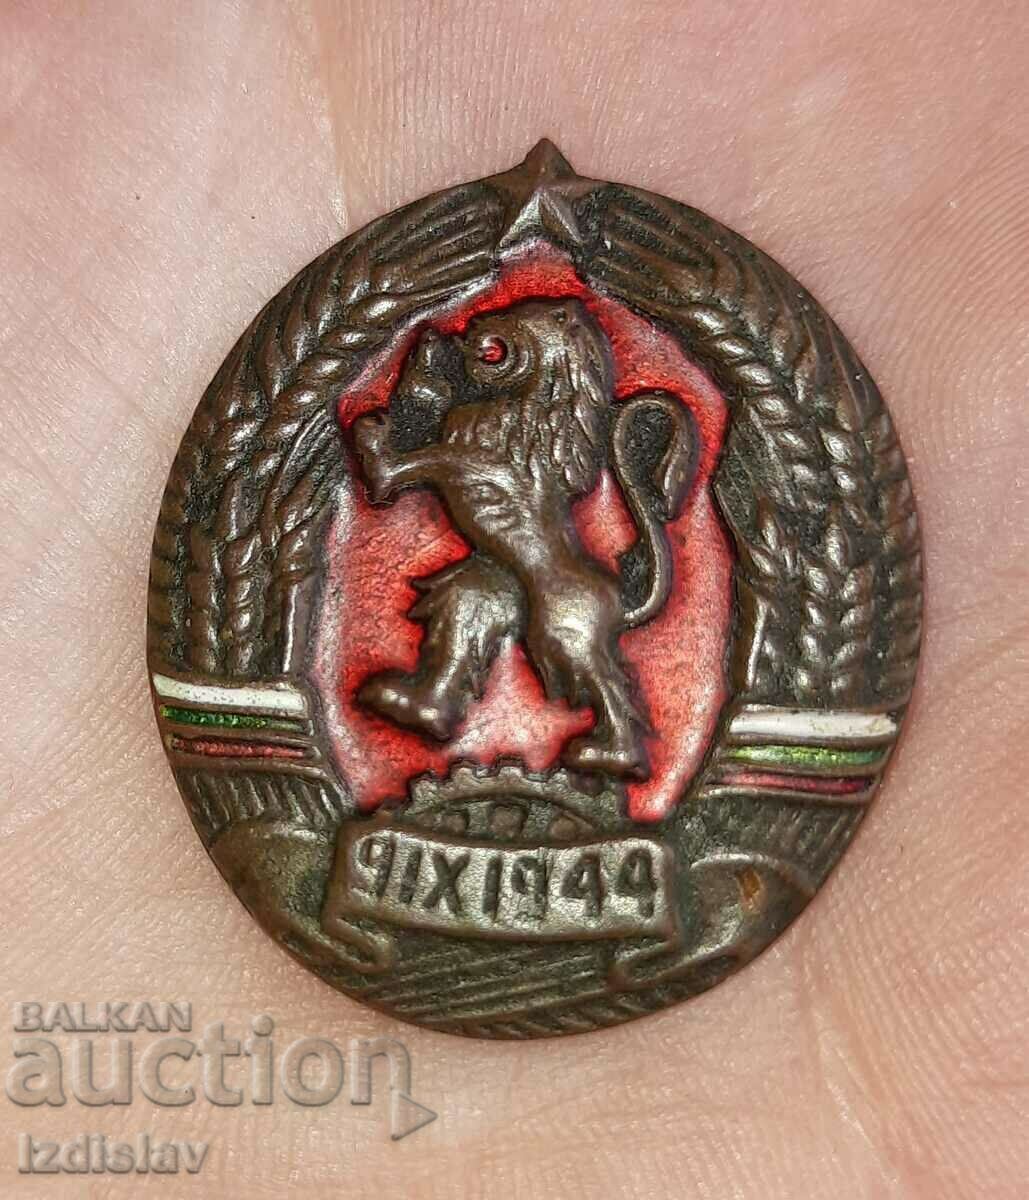 Massive bronze badge, cockade, Bulgarian coat of arms